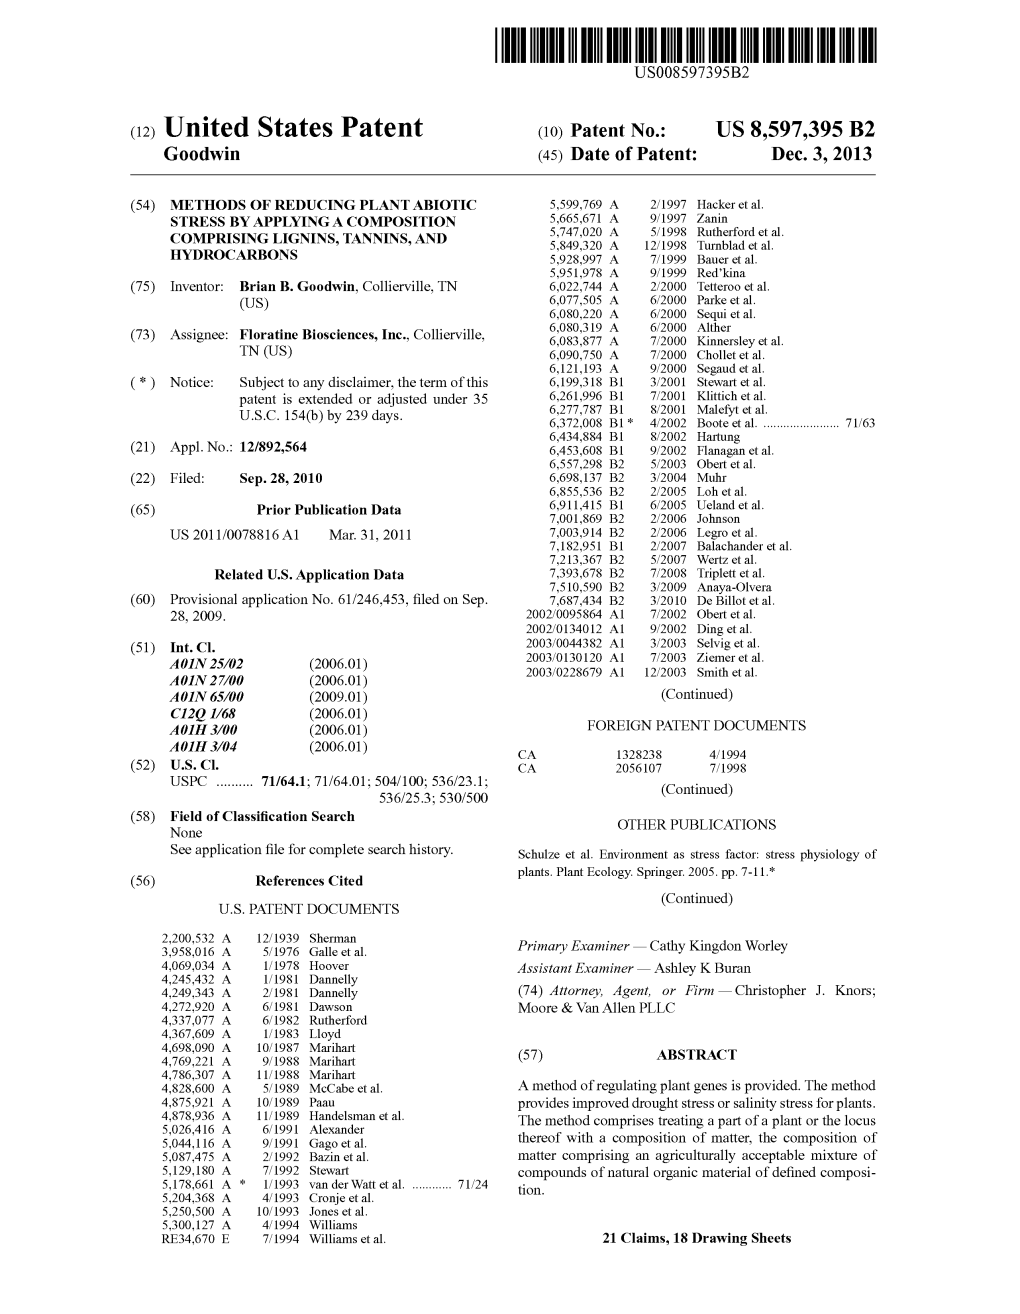 (12) United States Patent (10) Patent No.: US 8,597,395 B2 G00dwin (45) Date of Patent: Dec